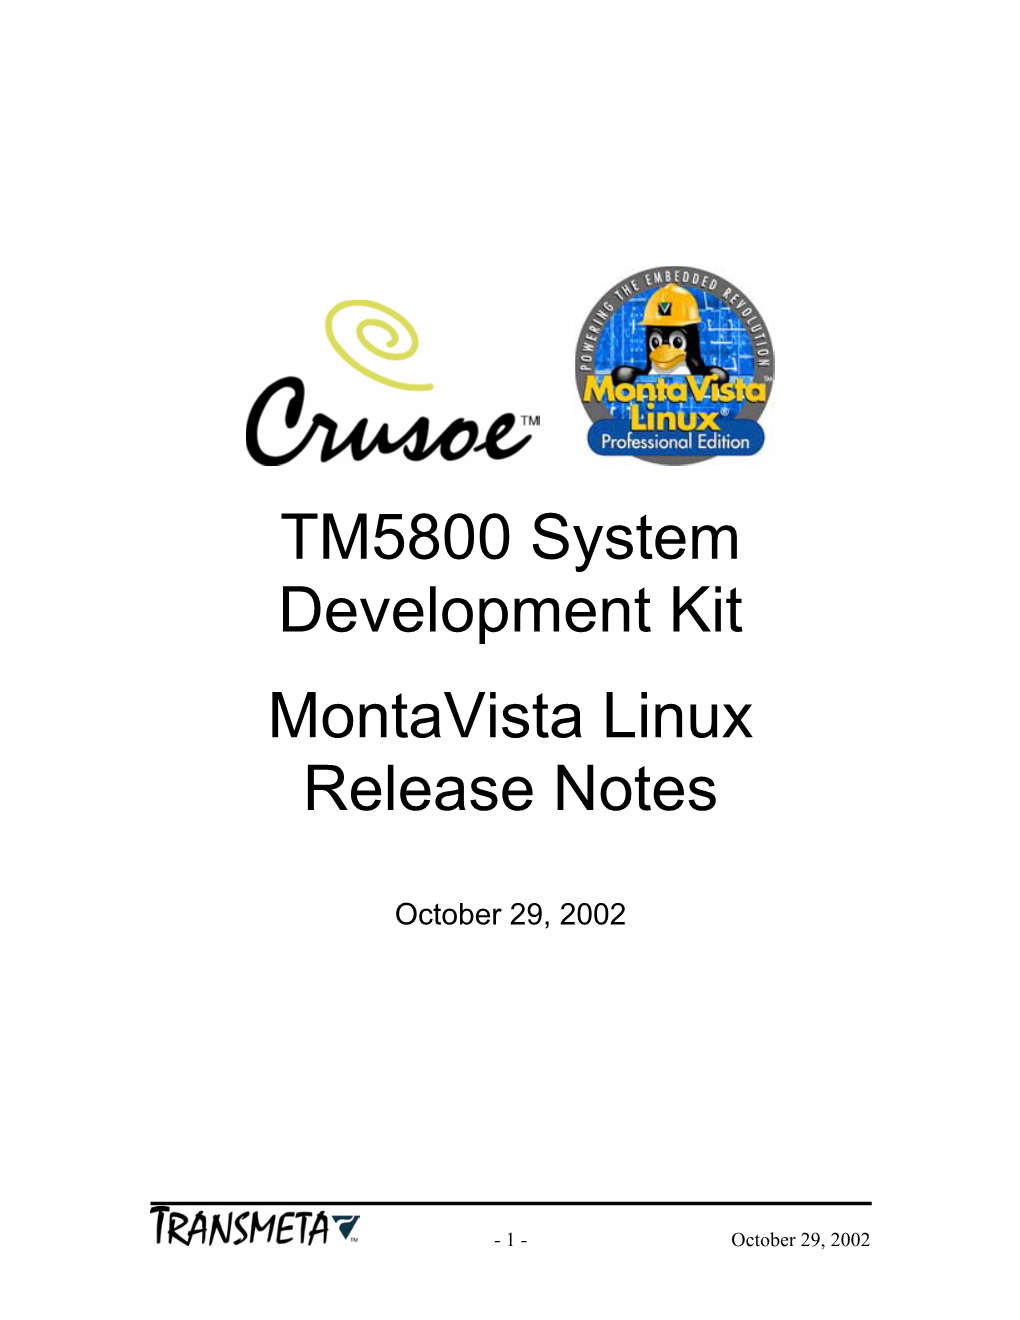 TM5800 System Development Kit Montavista Linux Release Notes